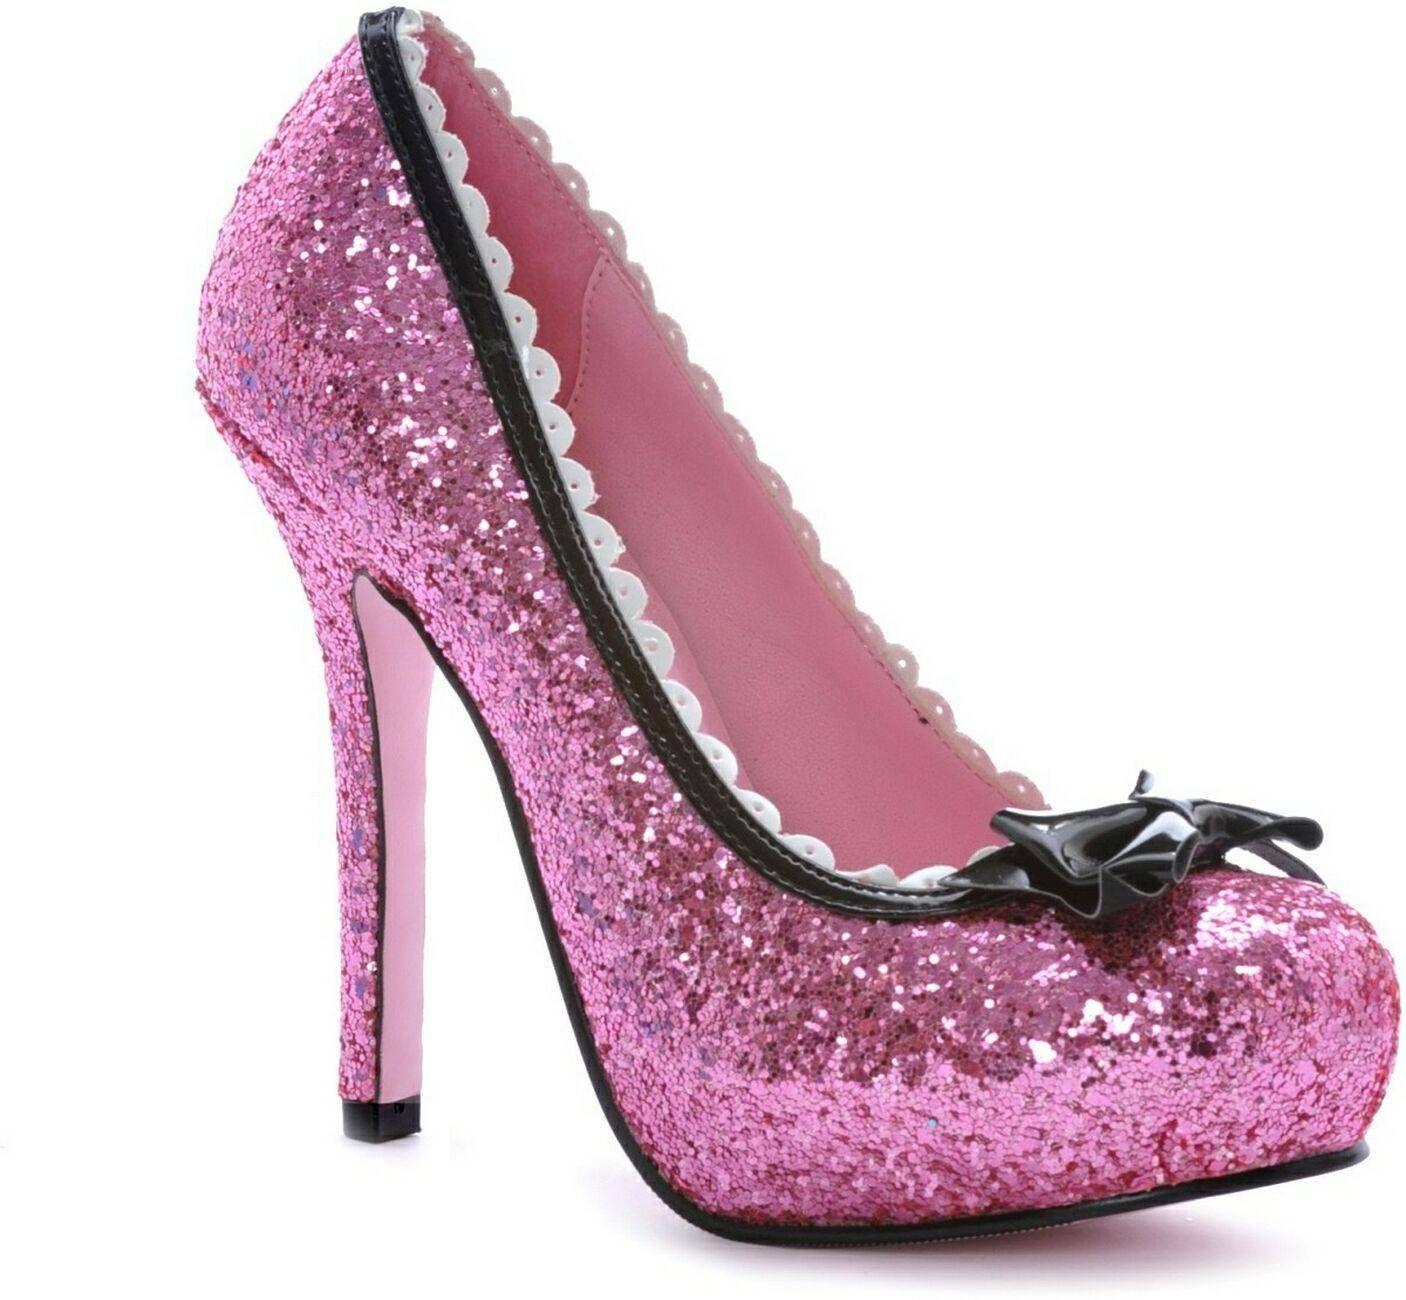 Glitter Pink Shoes Wallpaper. Free HD Wallpaper. Ellie shoes, Heels, Glitter shoes